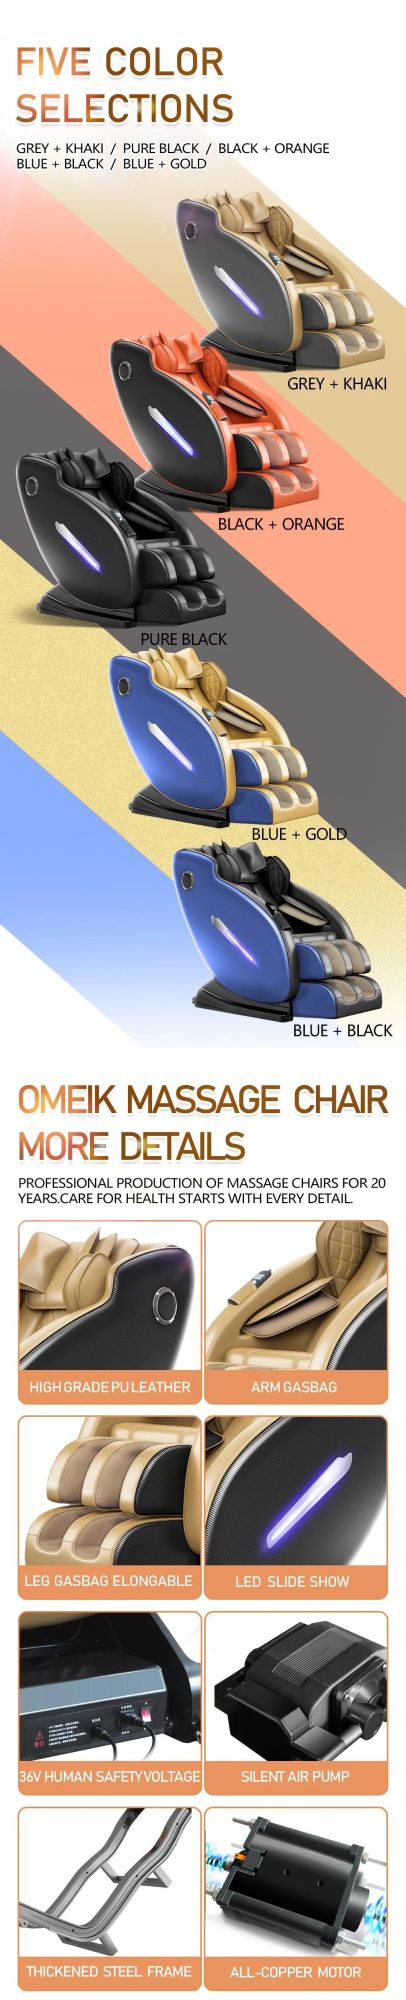 Luxury Full Body 4D Zero Gravity Massage Chair